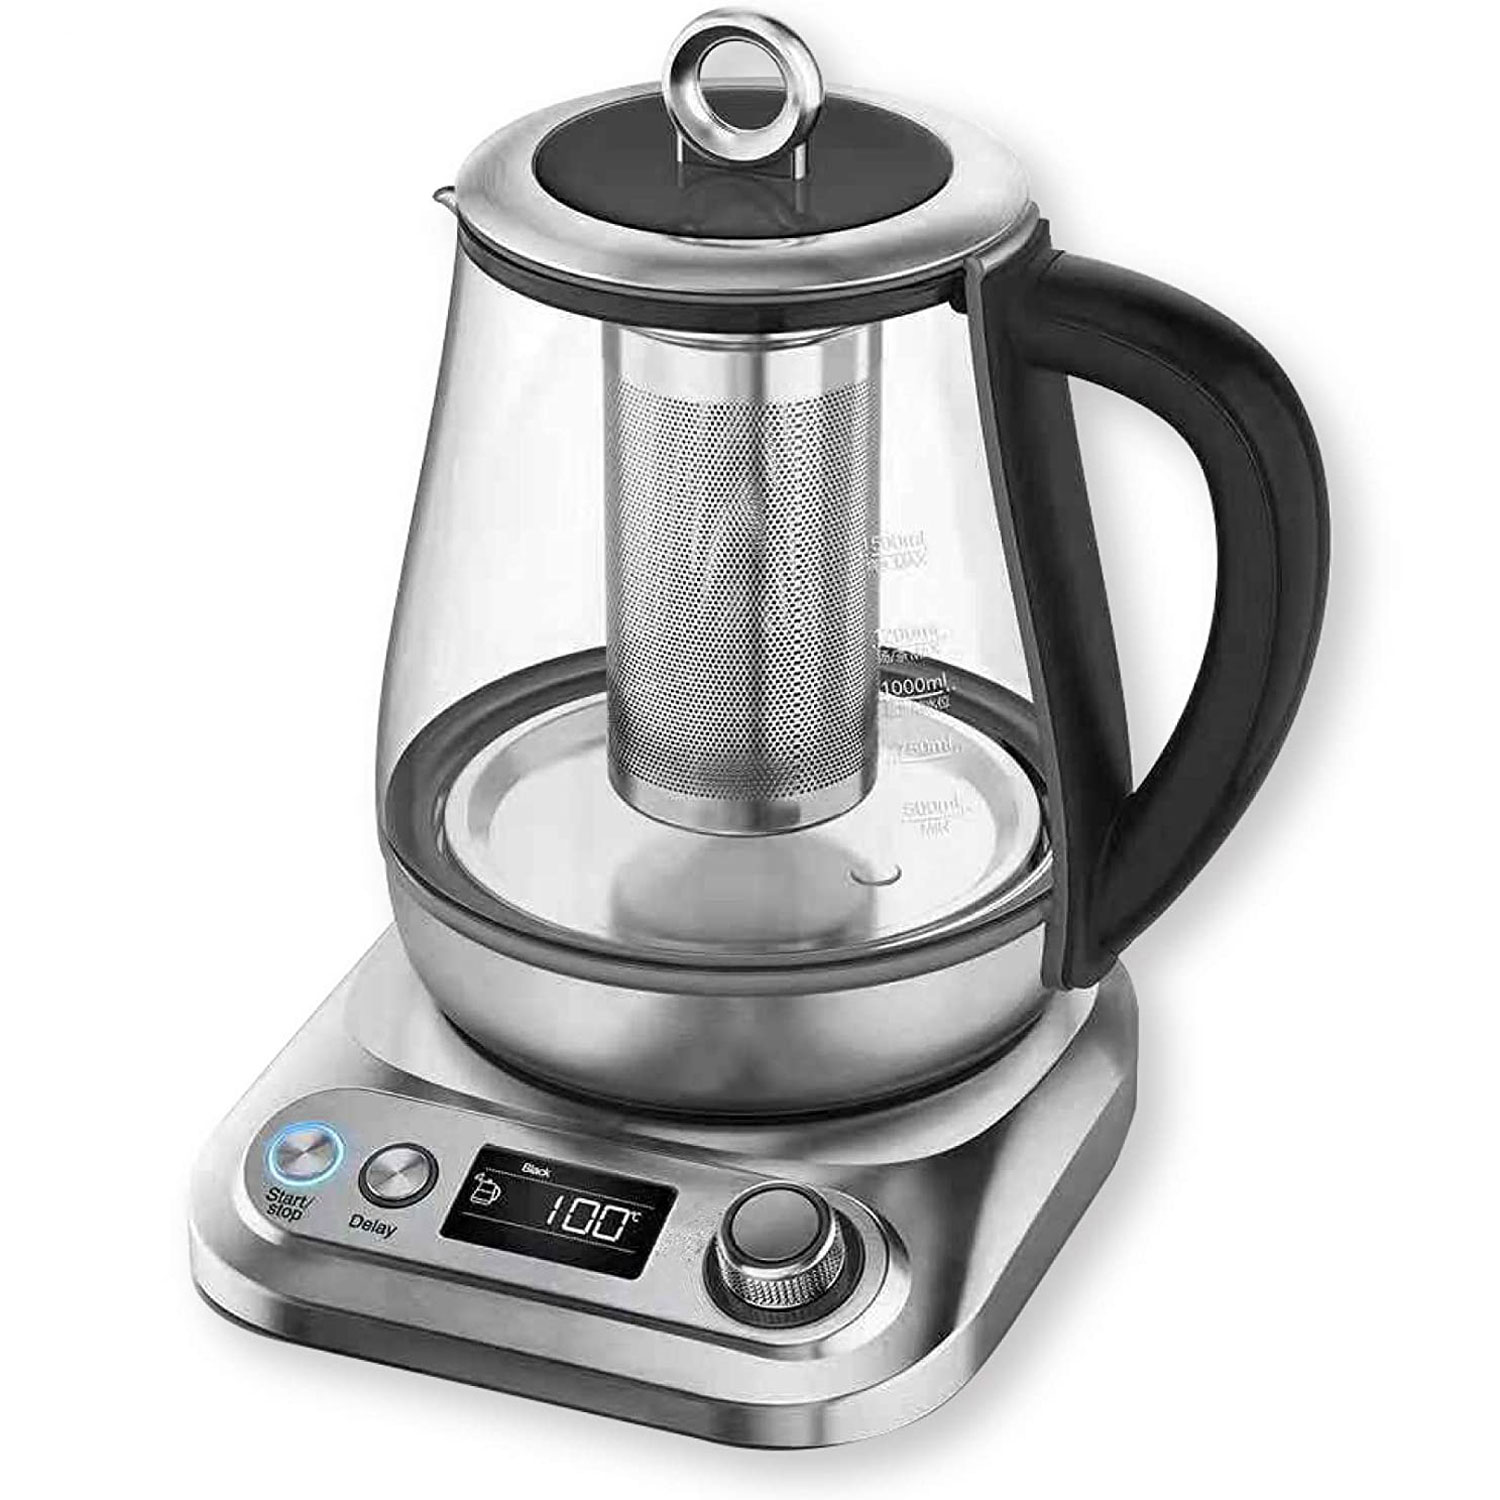 Chefman 1.5 Liter Stainless Steel Electric Glass Kettle Tea Infuser